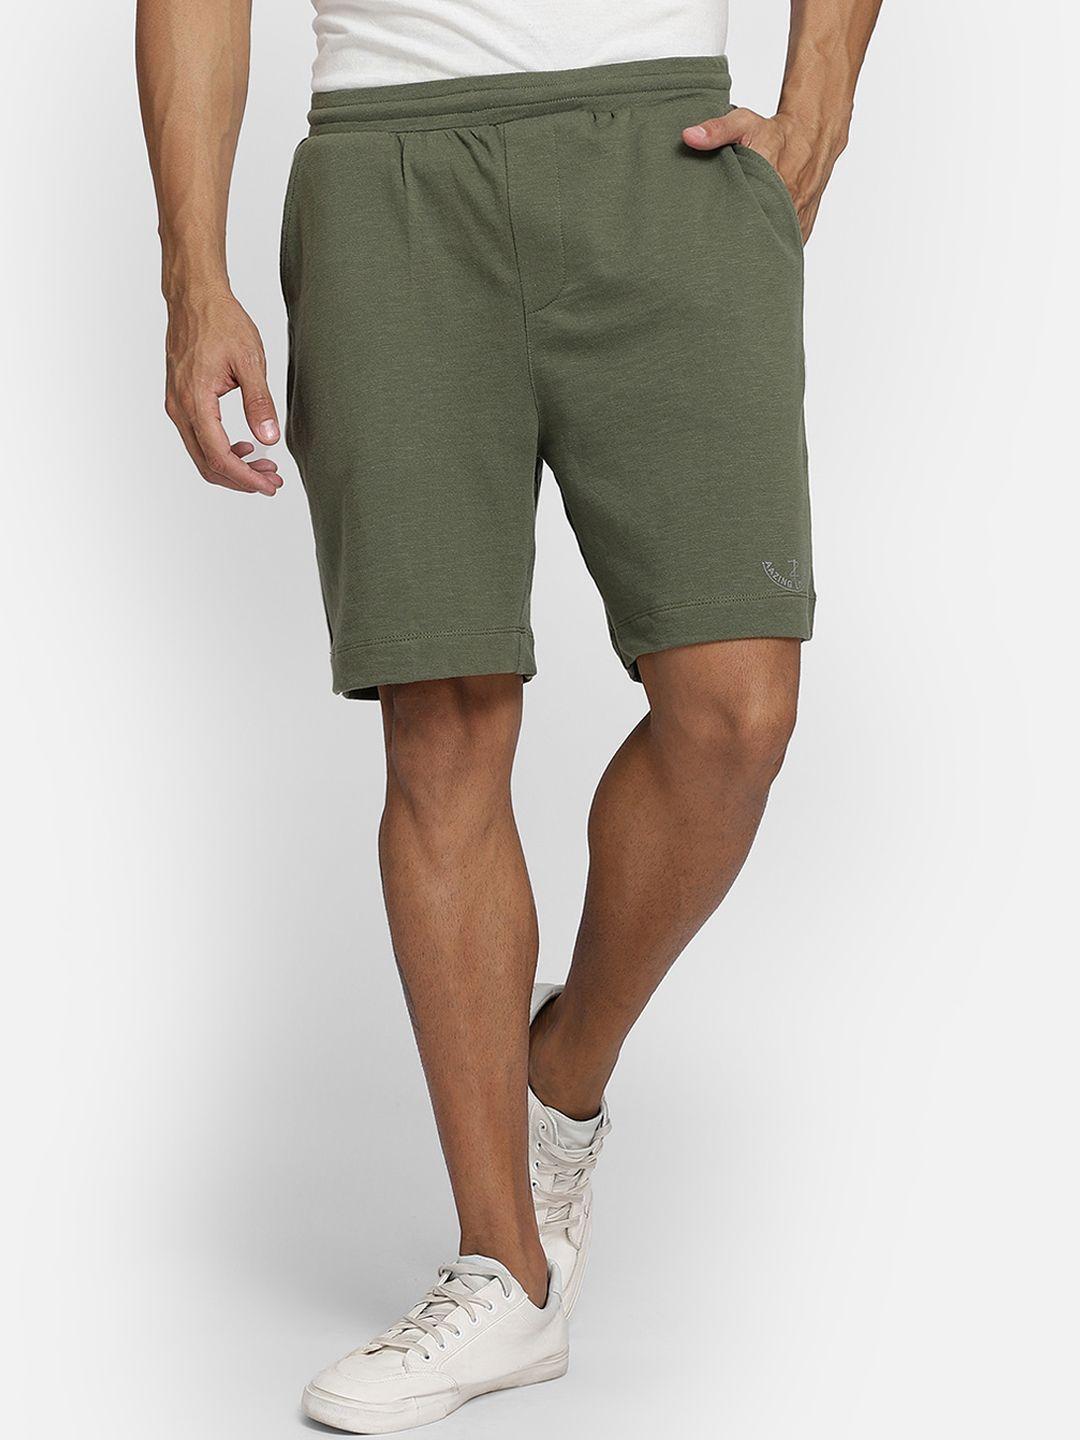 aazing-london-men-olive-green-shorts